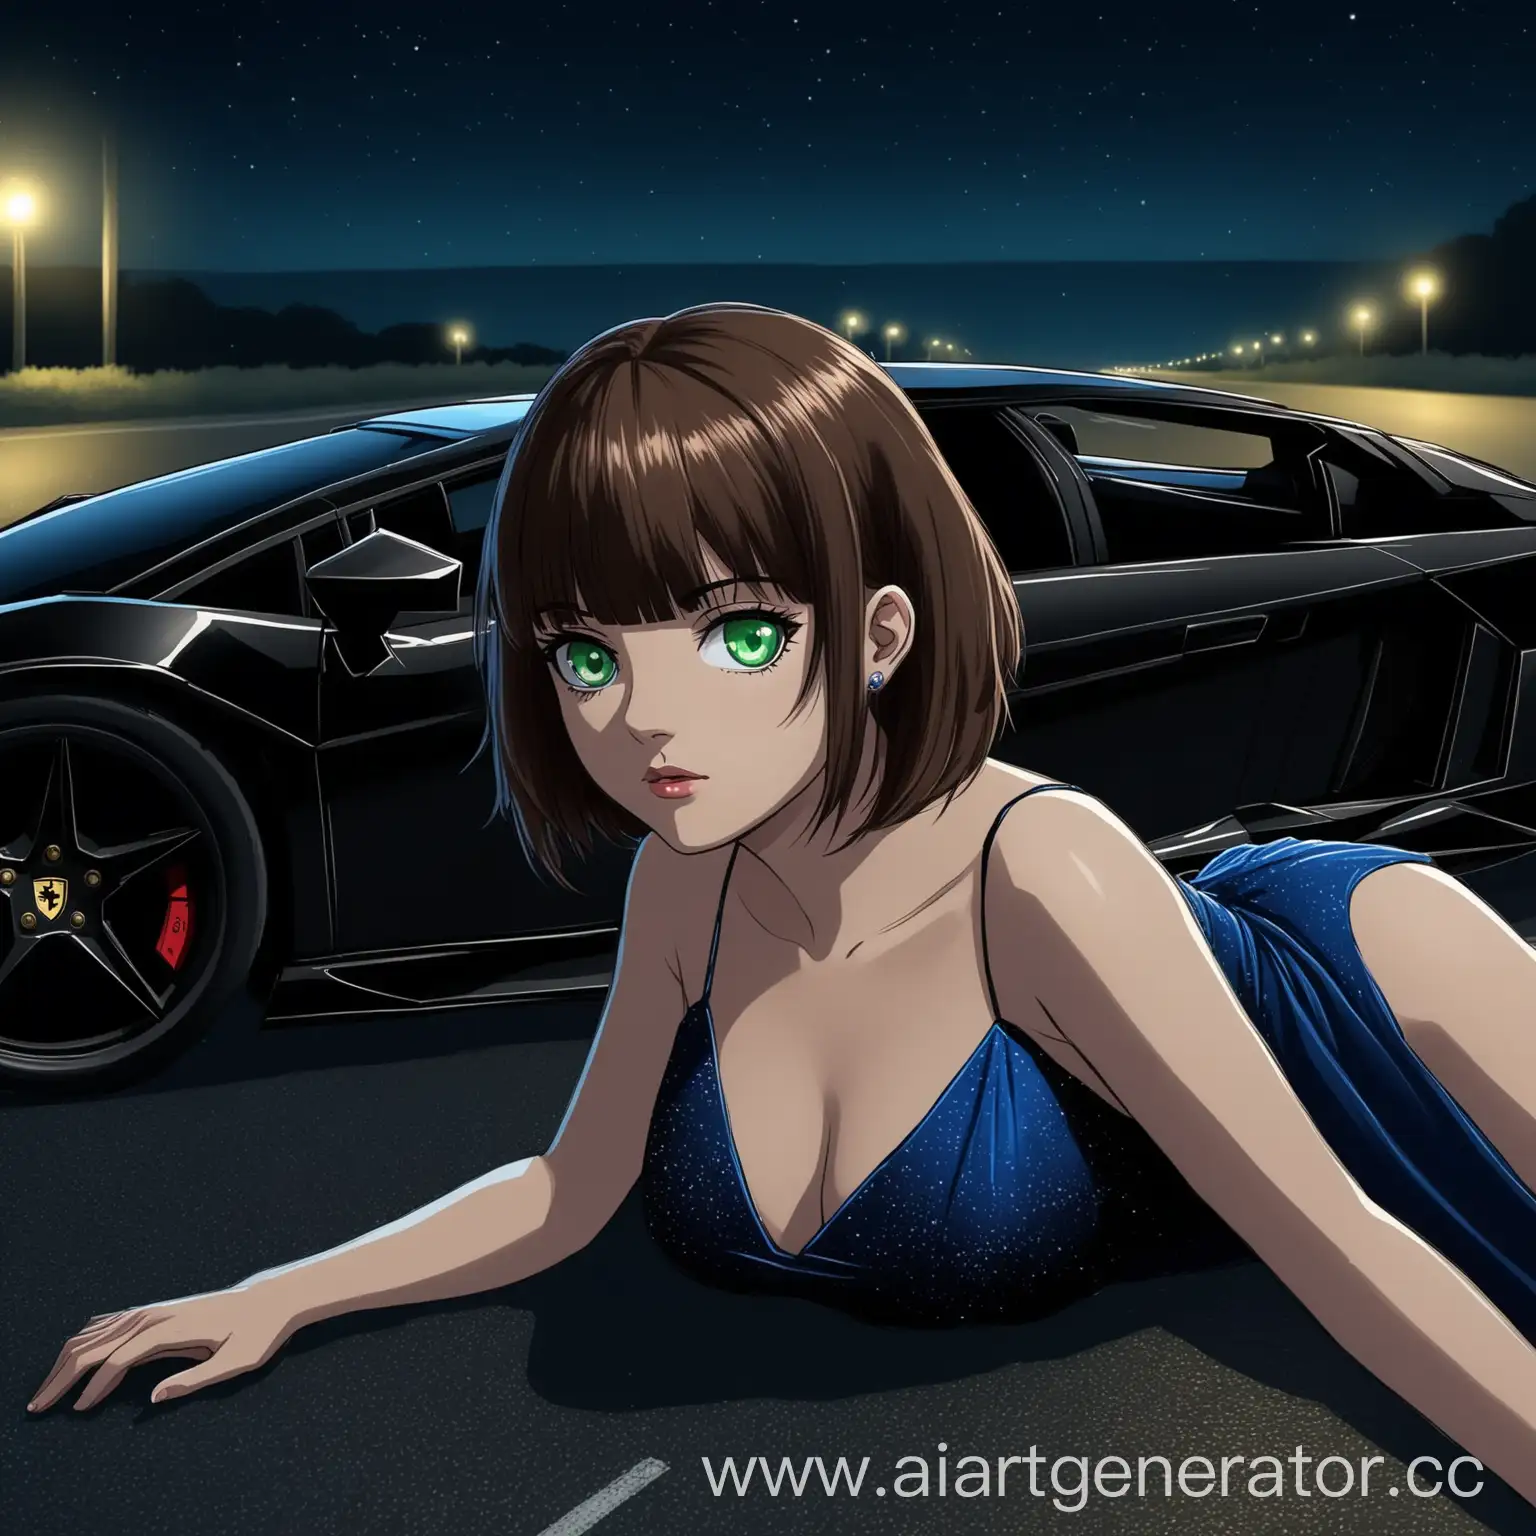 Aria-Roscente-Nighttime-Elegance-Blue-Dress-with-Lamborghini